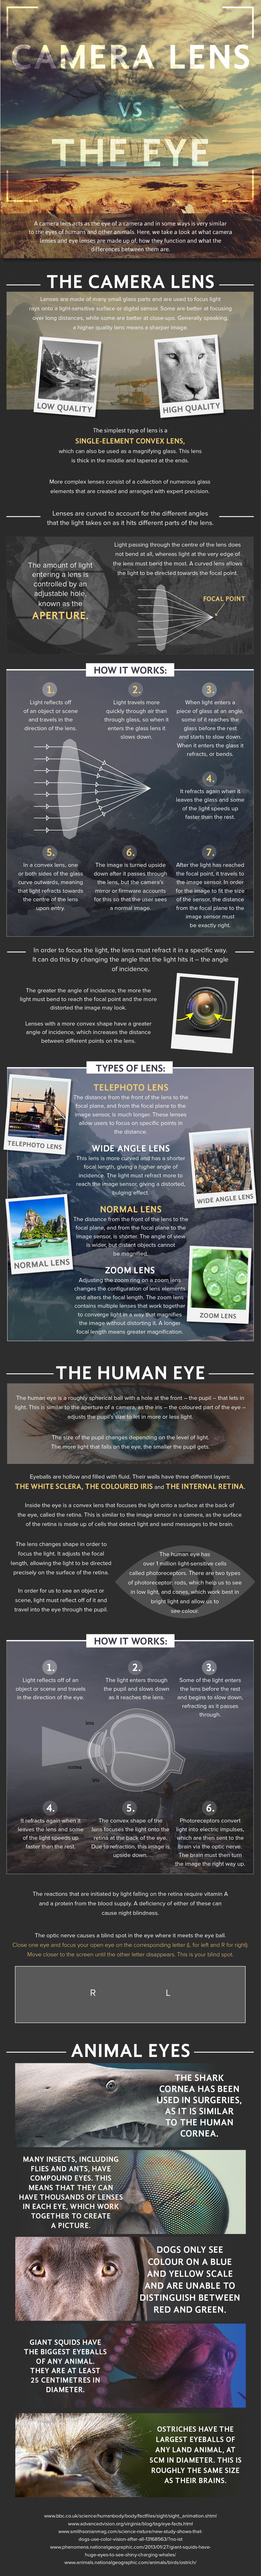 Camera Lens vs. The Eye 1